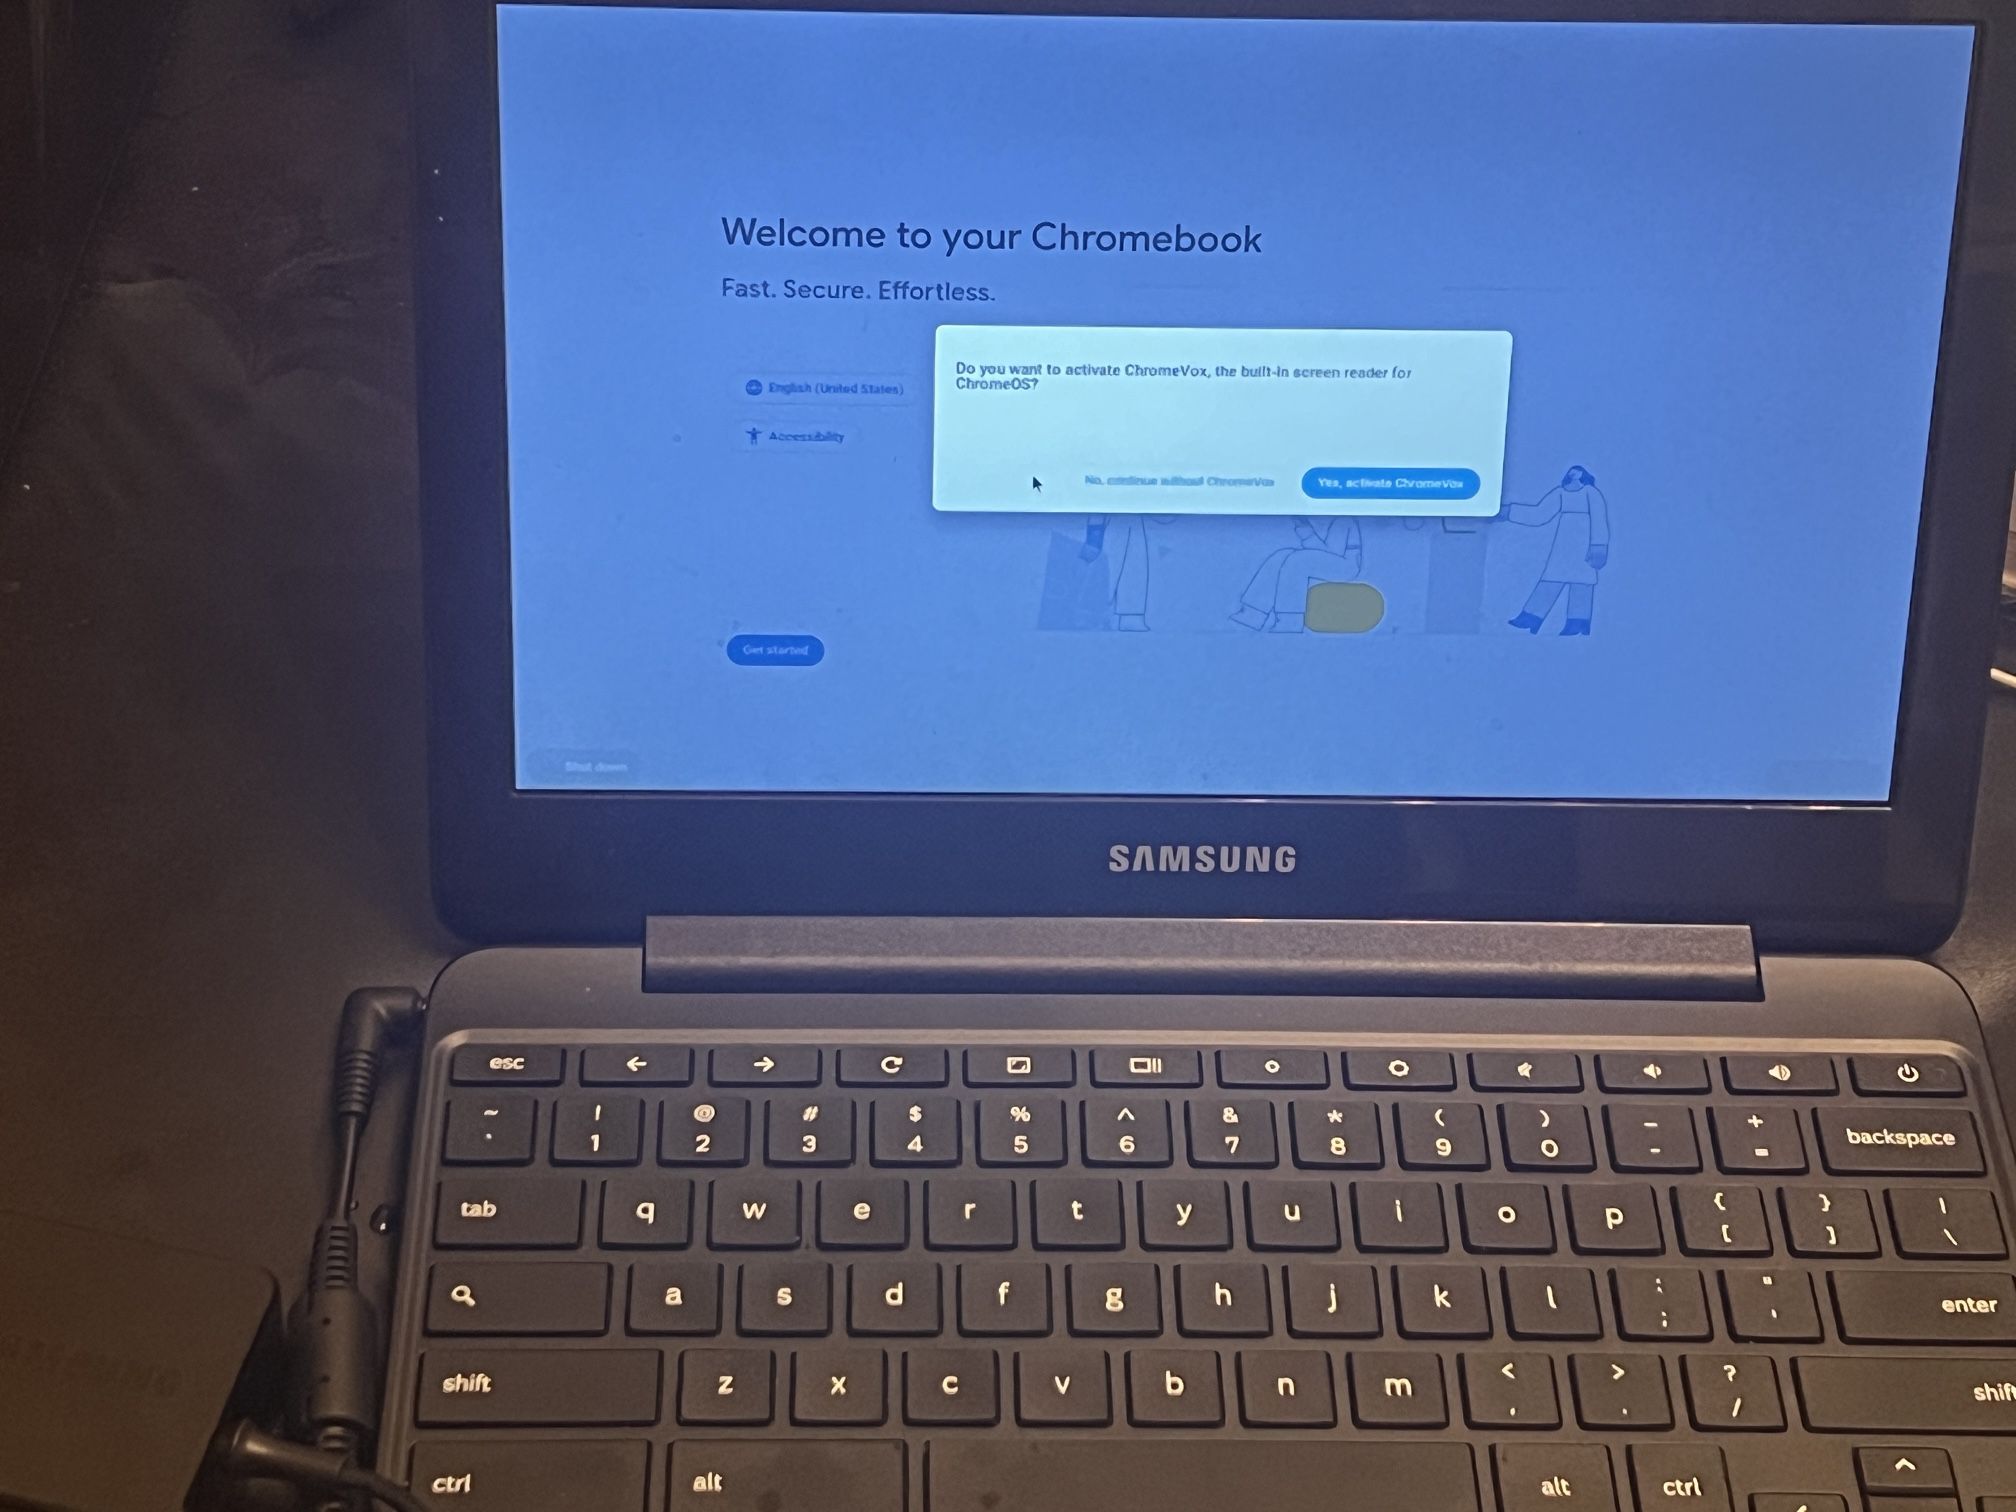 Samsung Chromebook generation 3